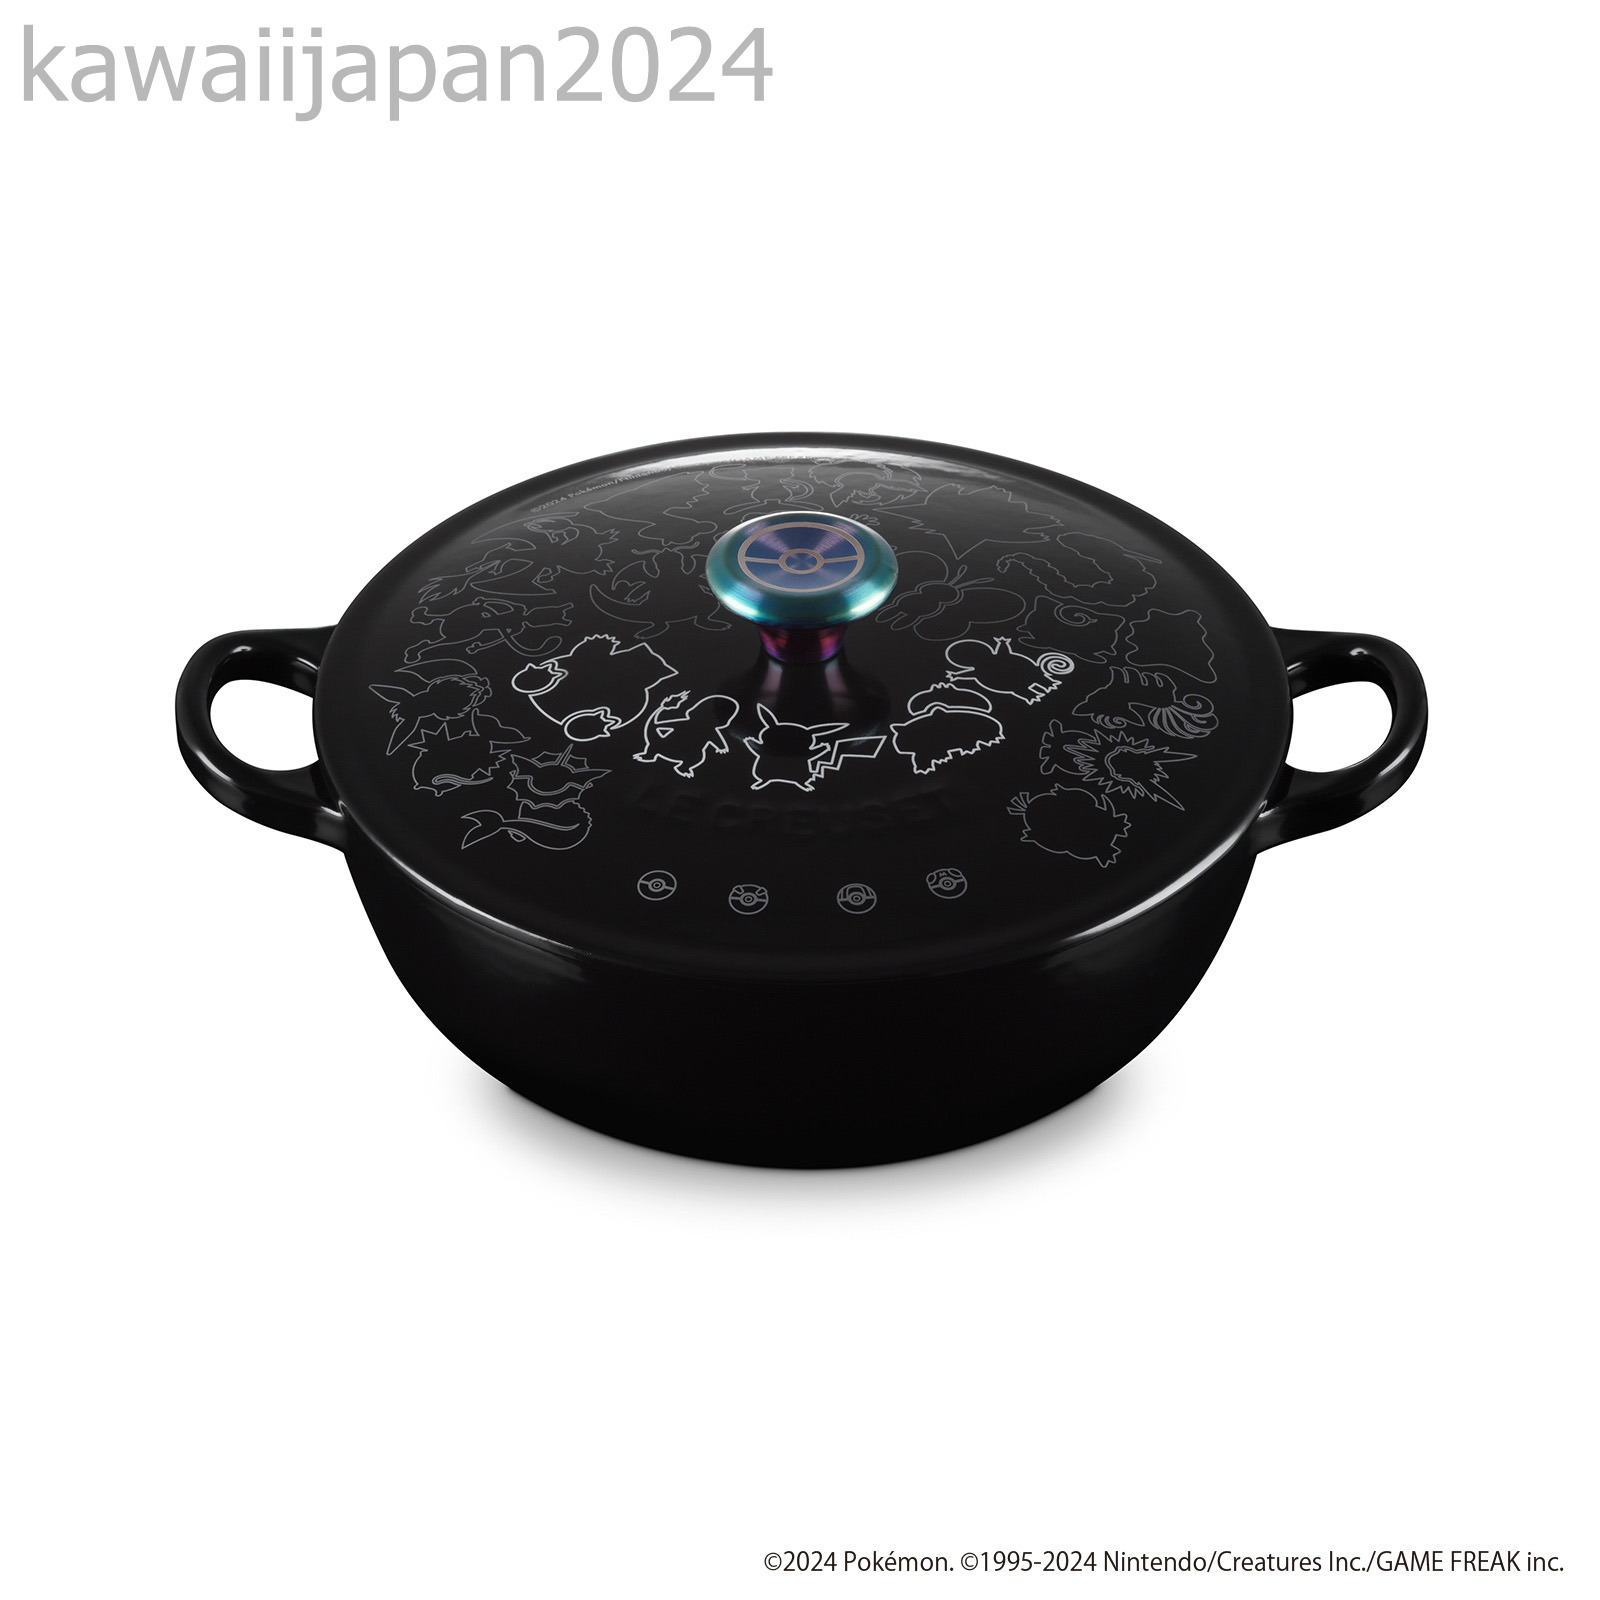 PSL Le Creuset Japan Limited 2024 Pokemon Marmit Shiny Black Cast Enameled Pot